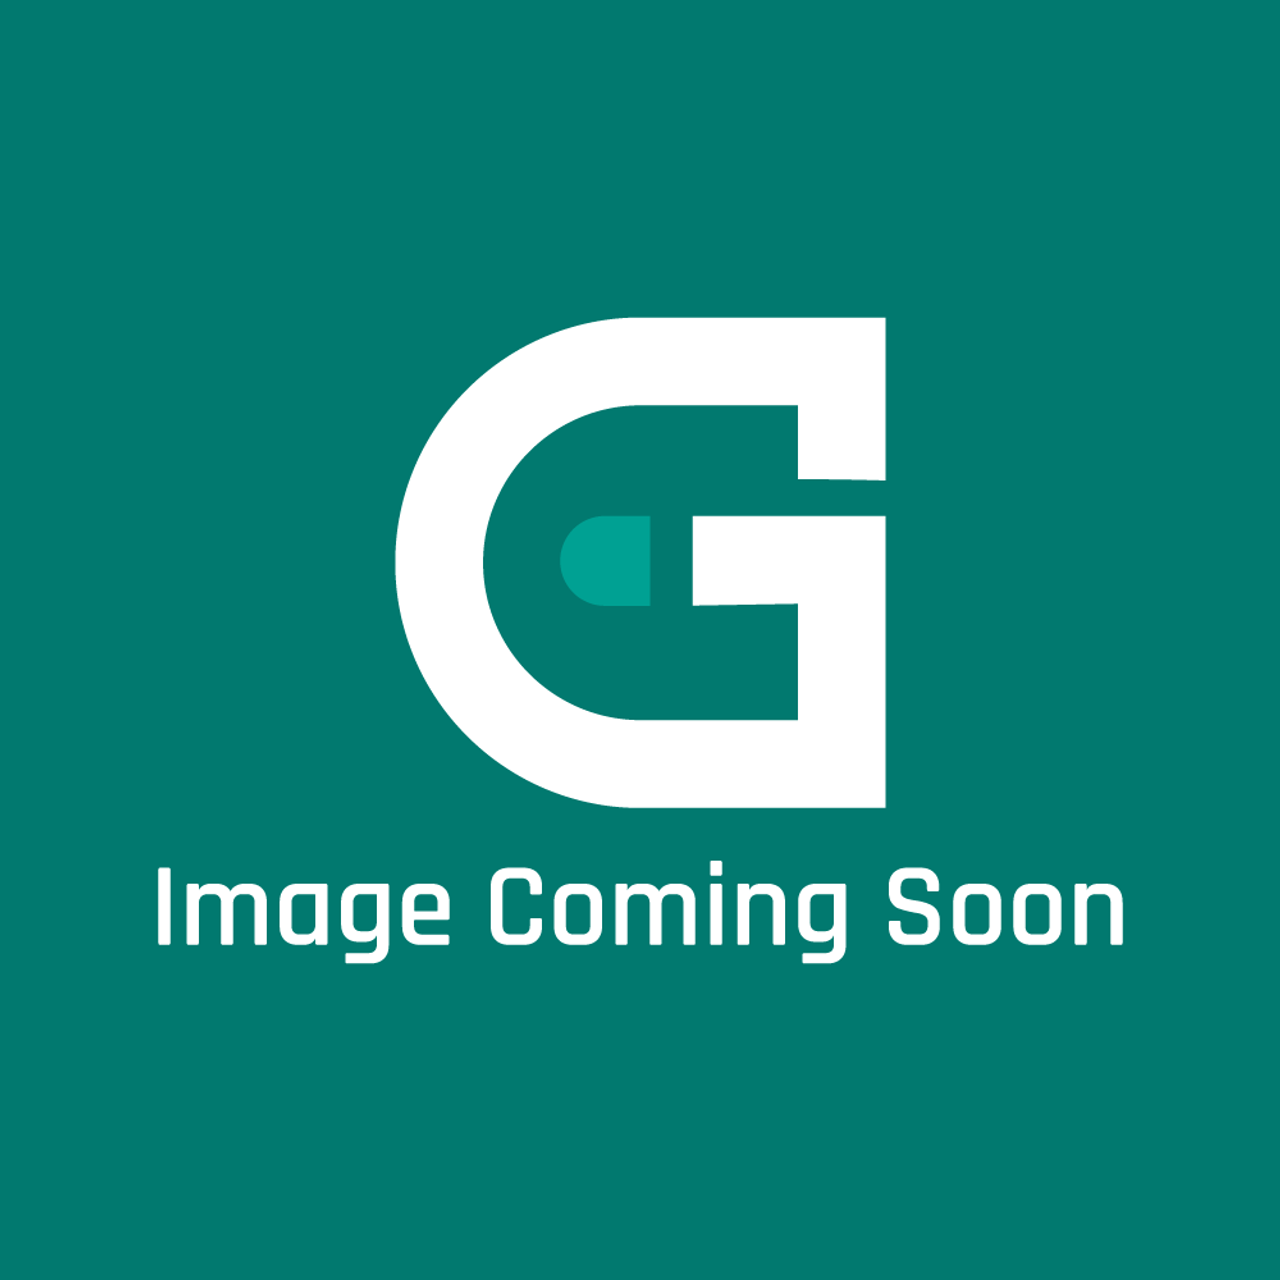 GE Appliances WE3M56 - Bearing Top - Image Coming Soon!